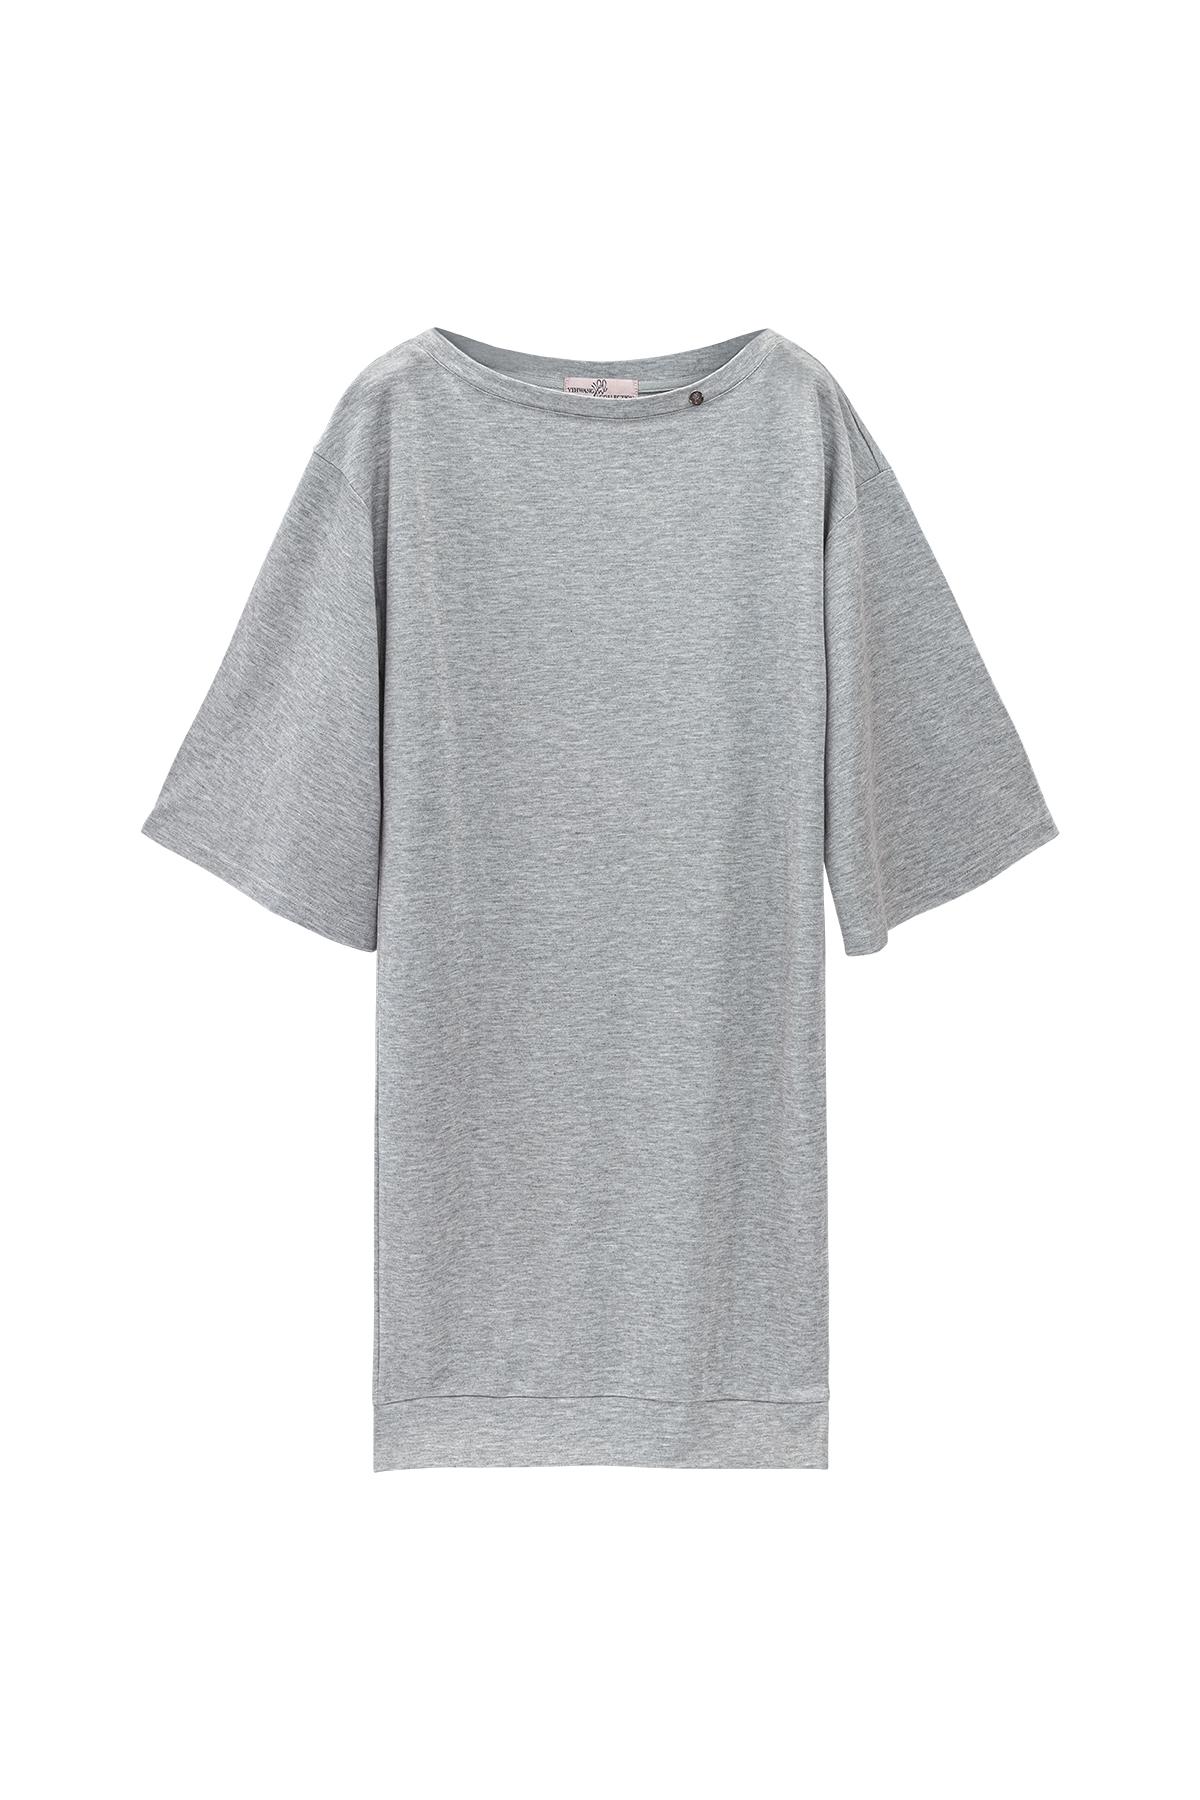 Parlak kaplamalı tişört elbise Grey L 